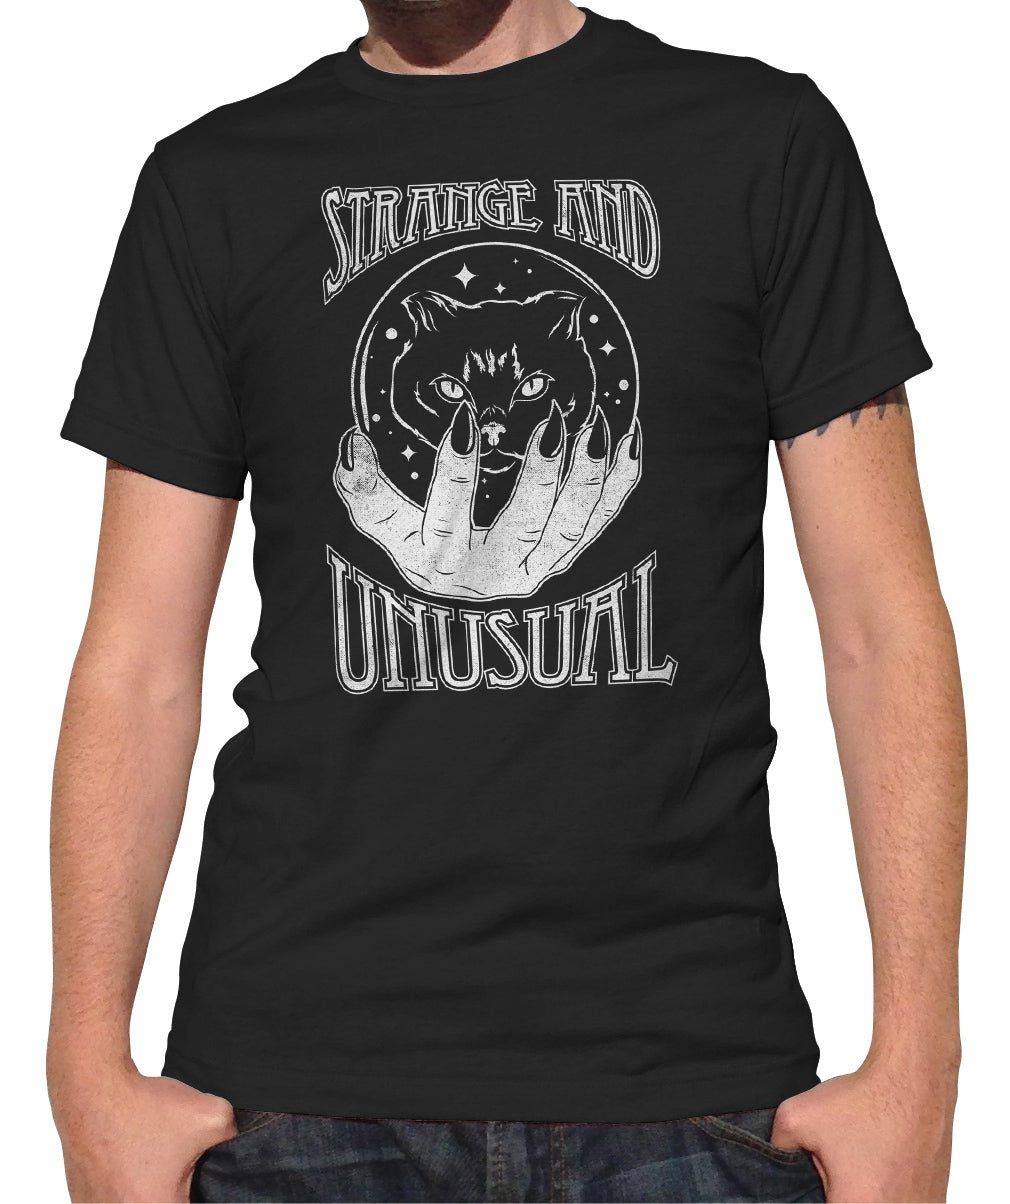 Men's Strange and Unusual T-Shirt - Occult shirt - Pastel Goth Shirt - Black Cat Shirt